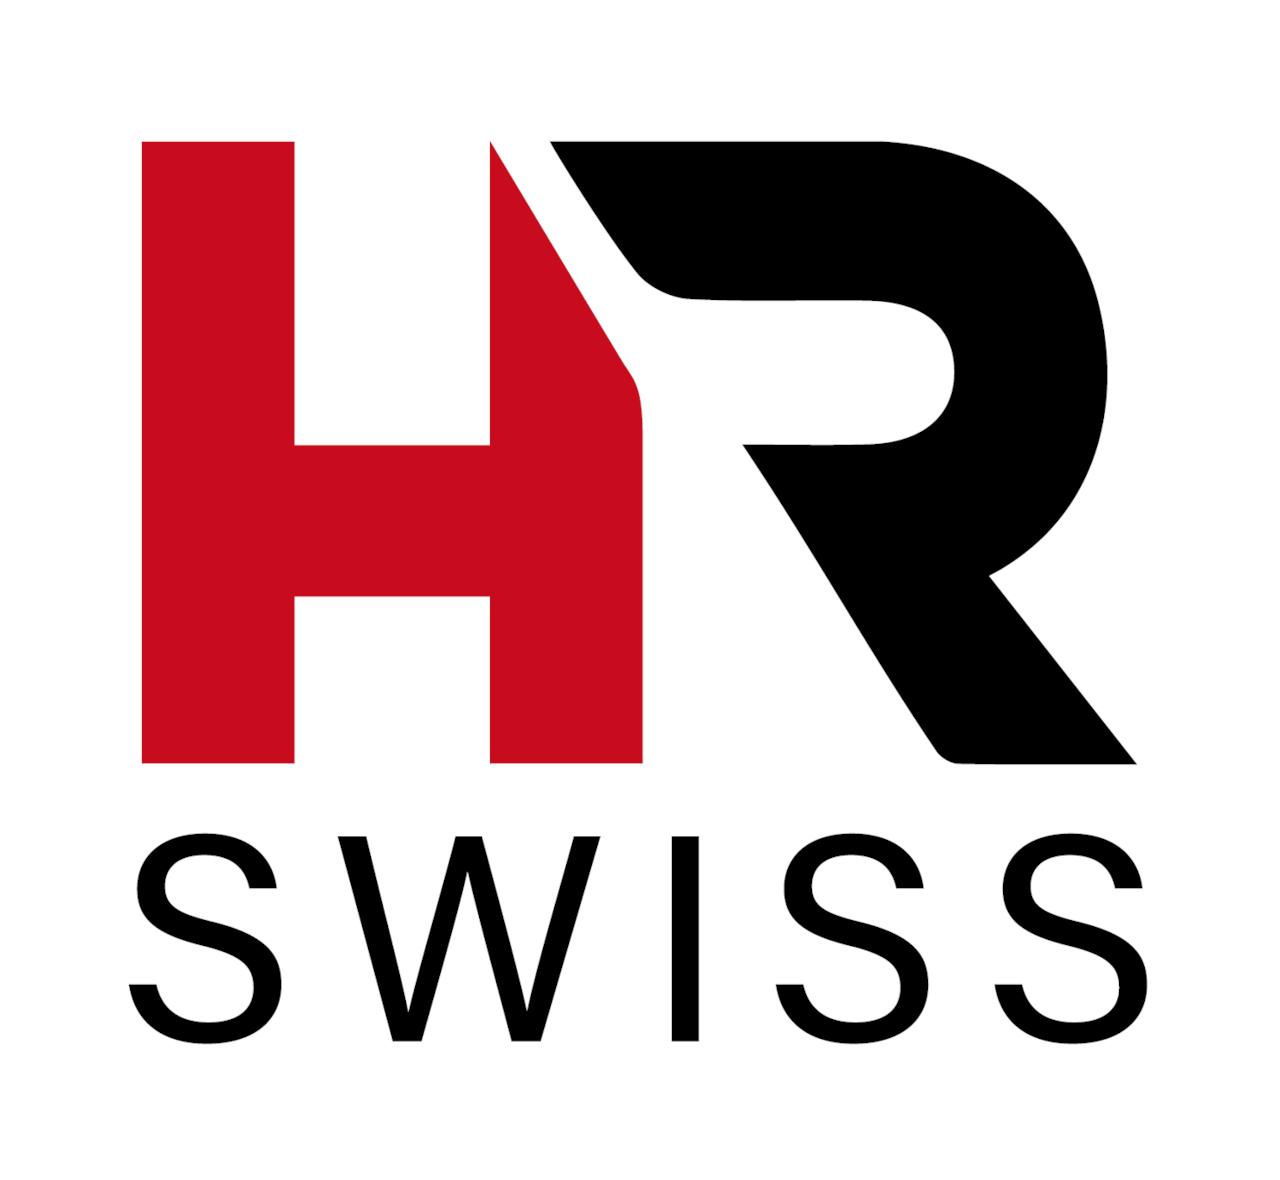 HR Swiss